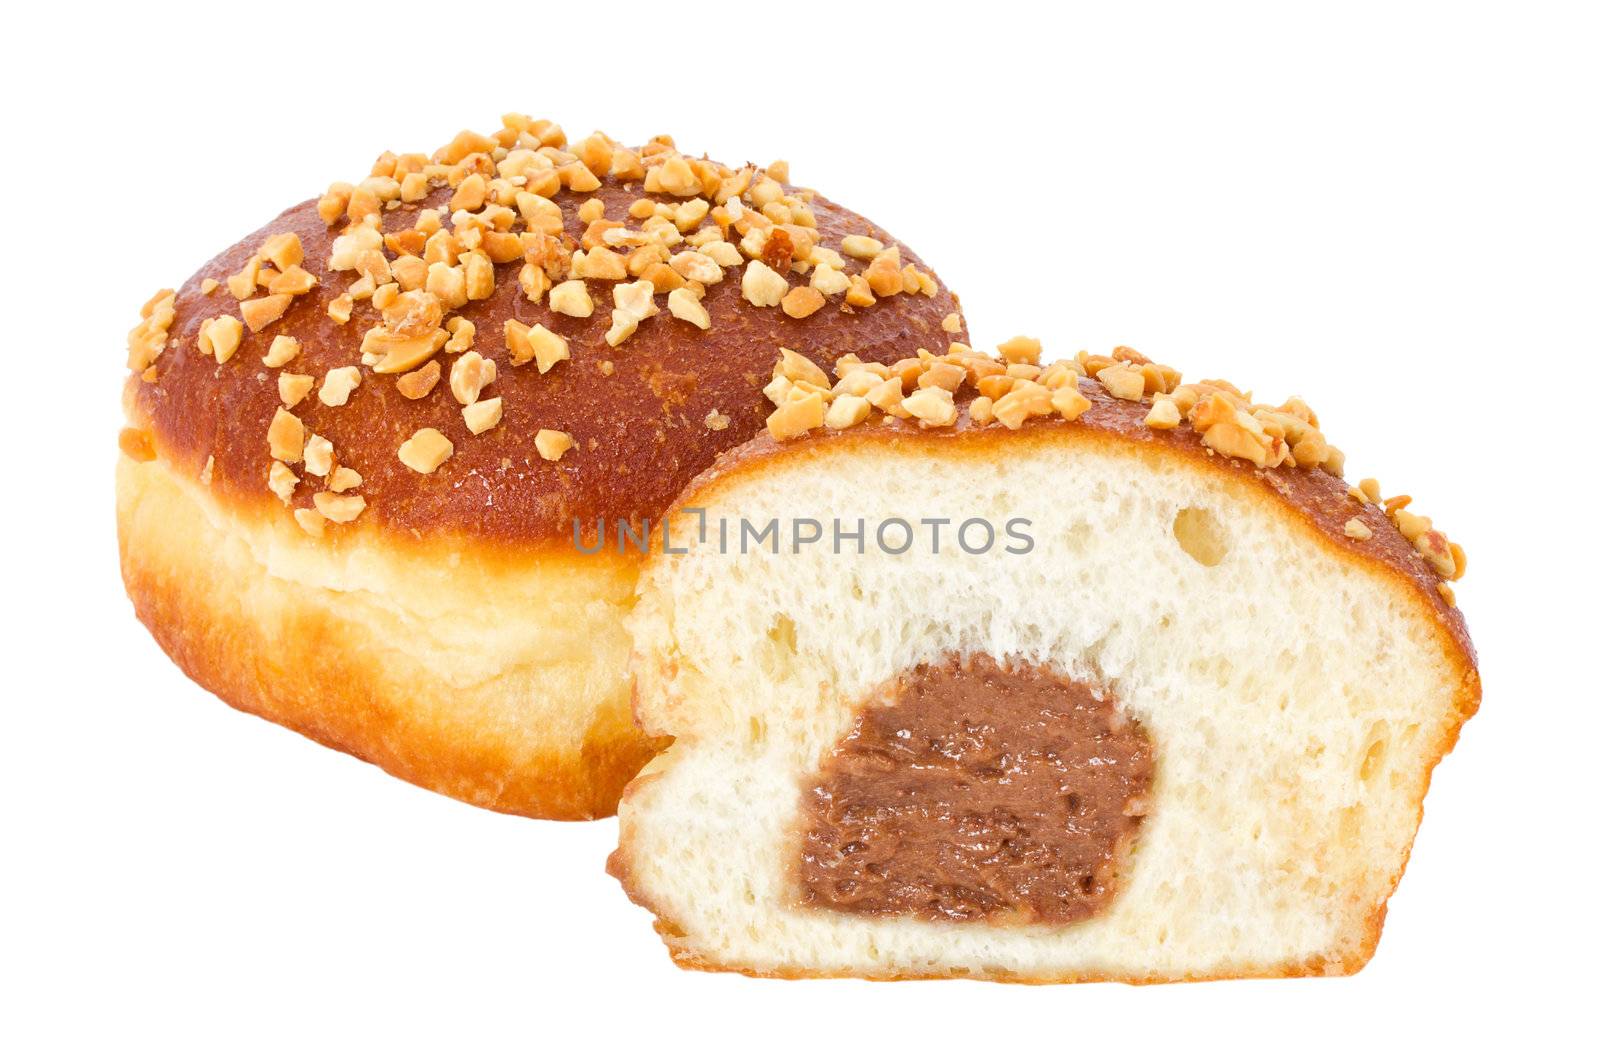 doughnut berliner by Alekcey